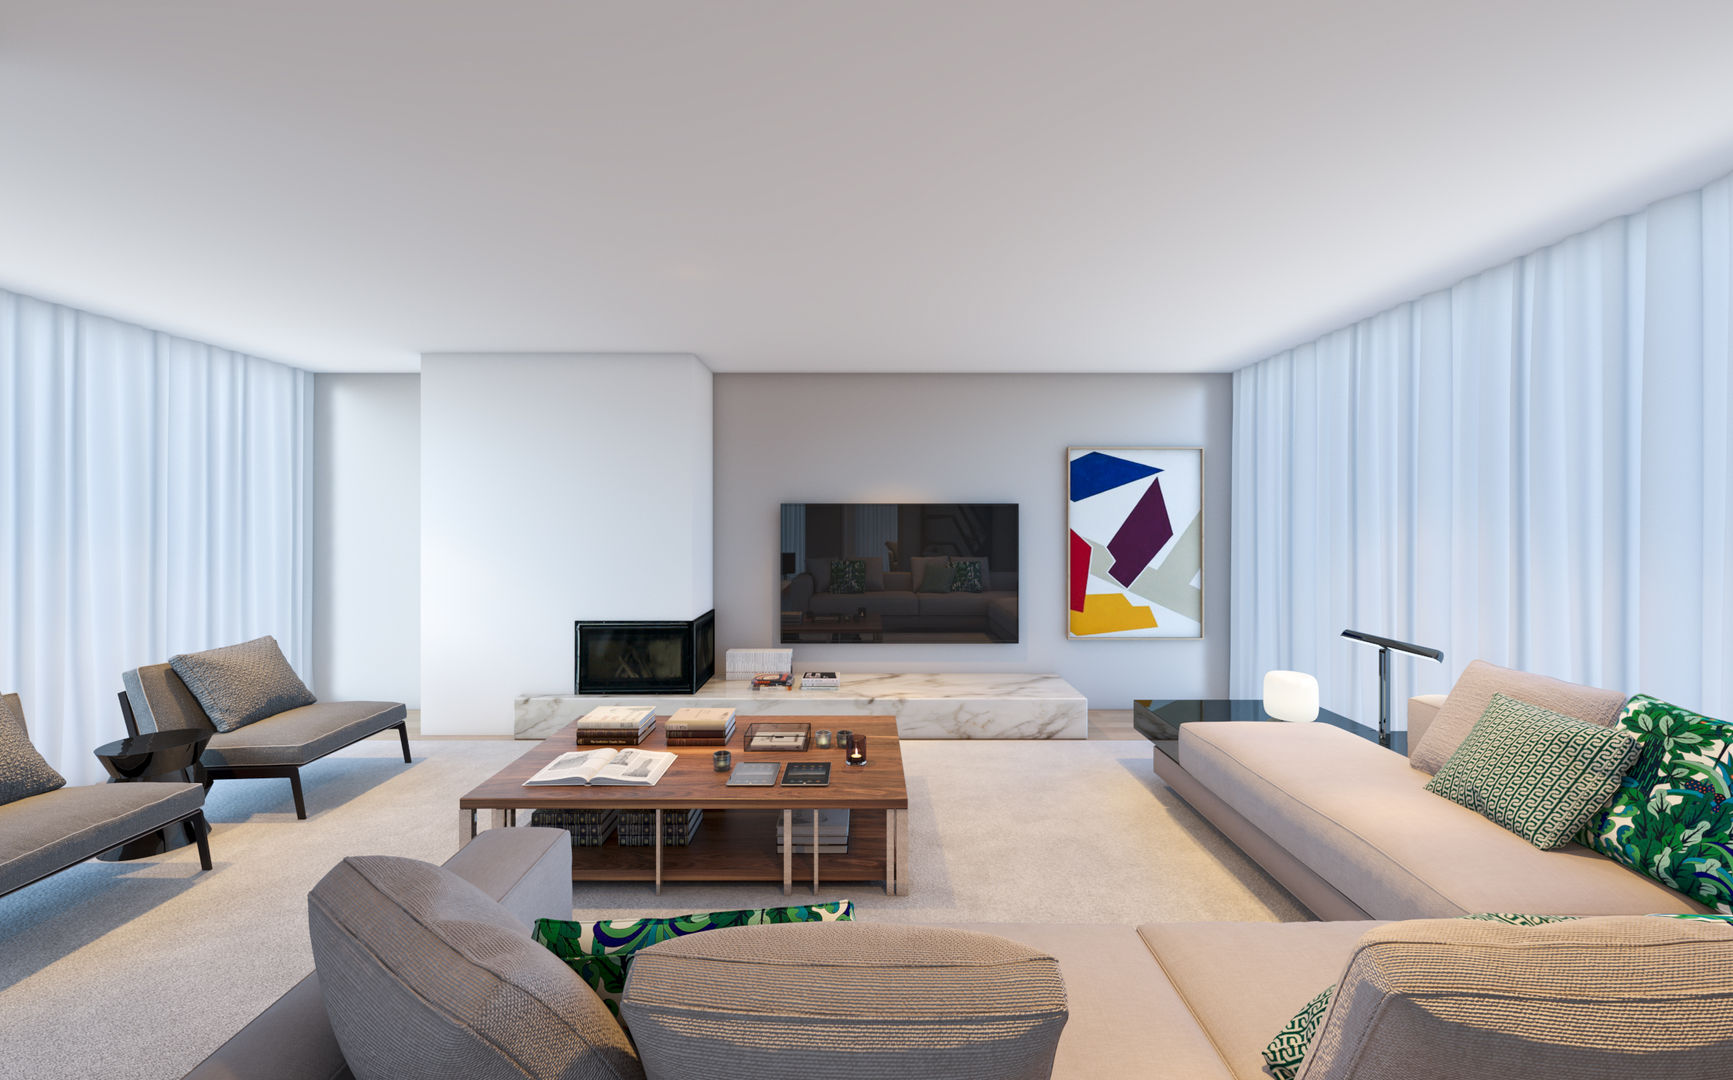 Salas, CASA MARQUES INTERIORES CASA MARQUES INTERIORES Modern living room TV stands & cabinets